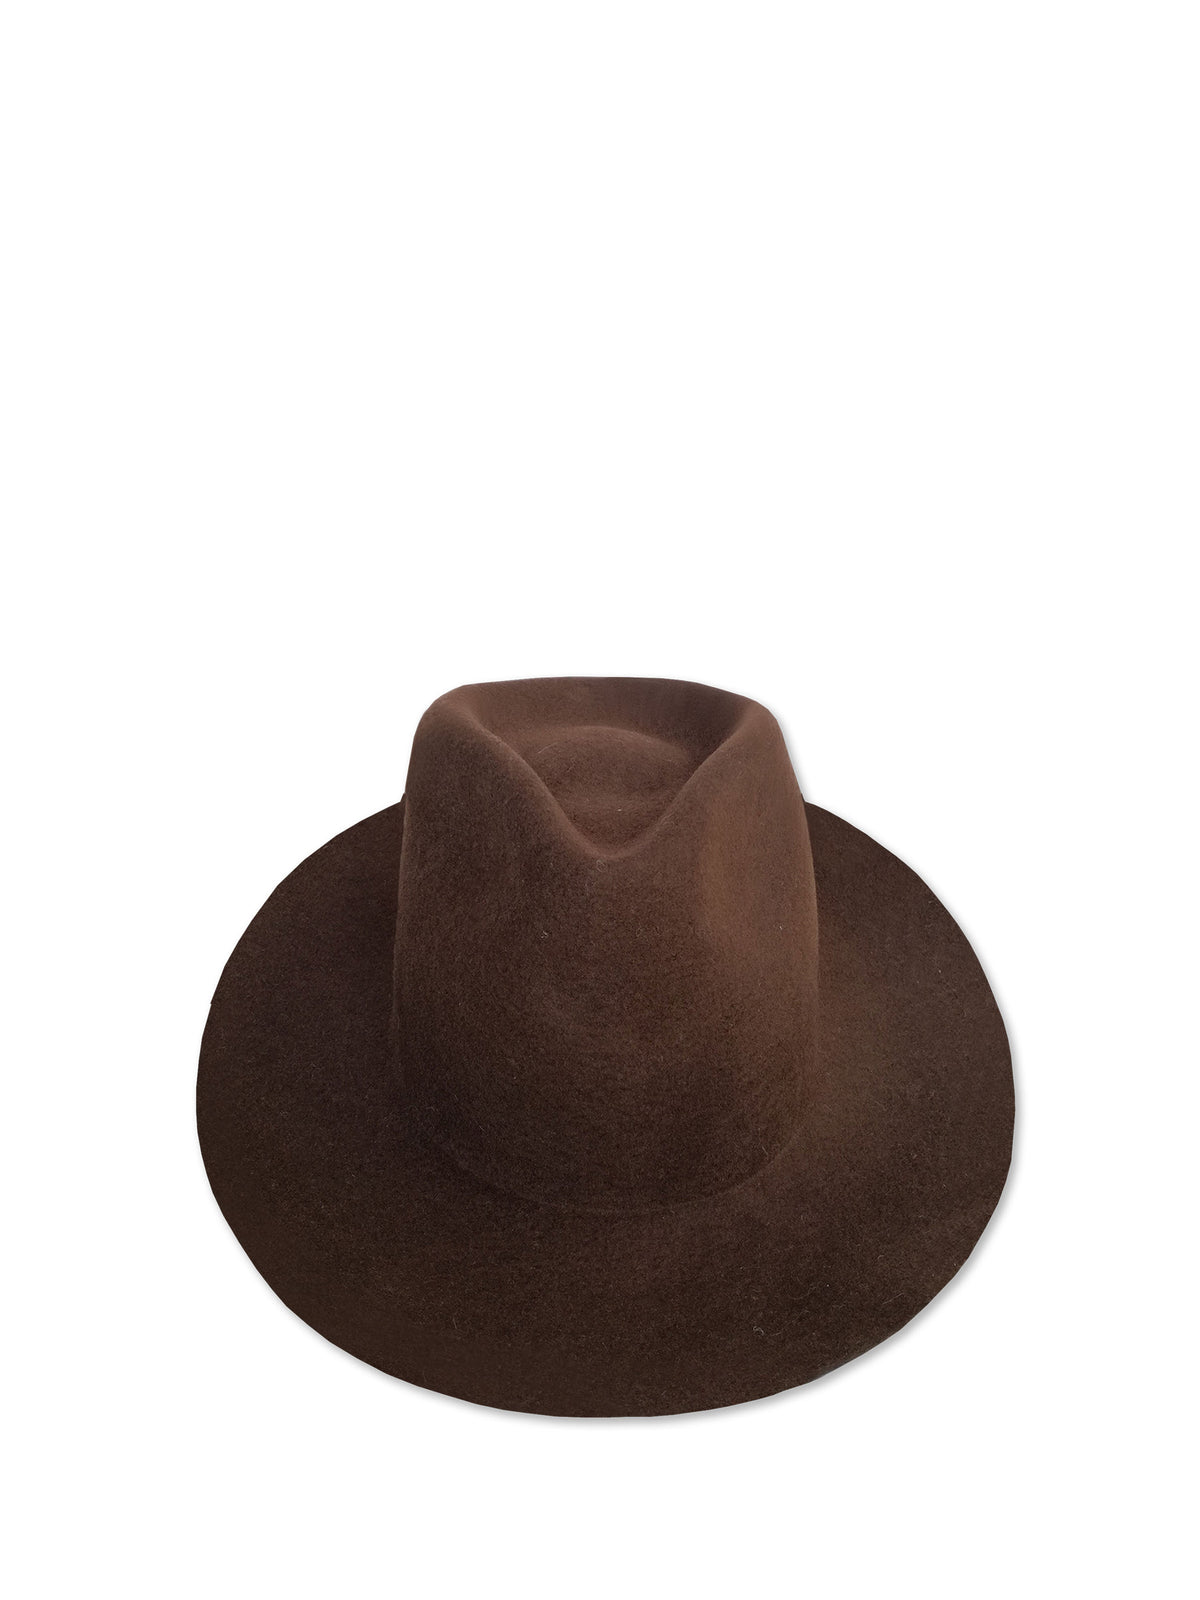 Aspen Hat 01 - Brown